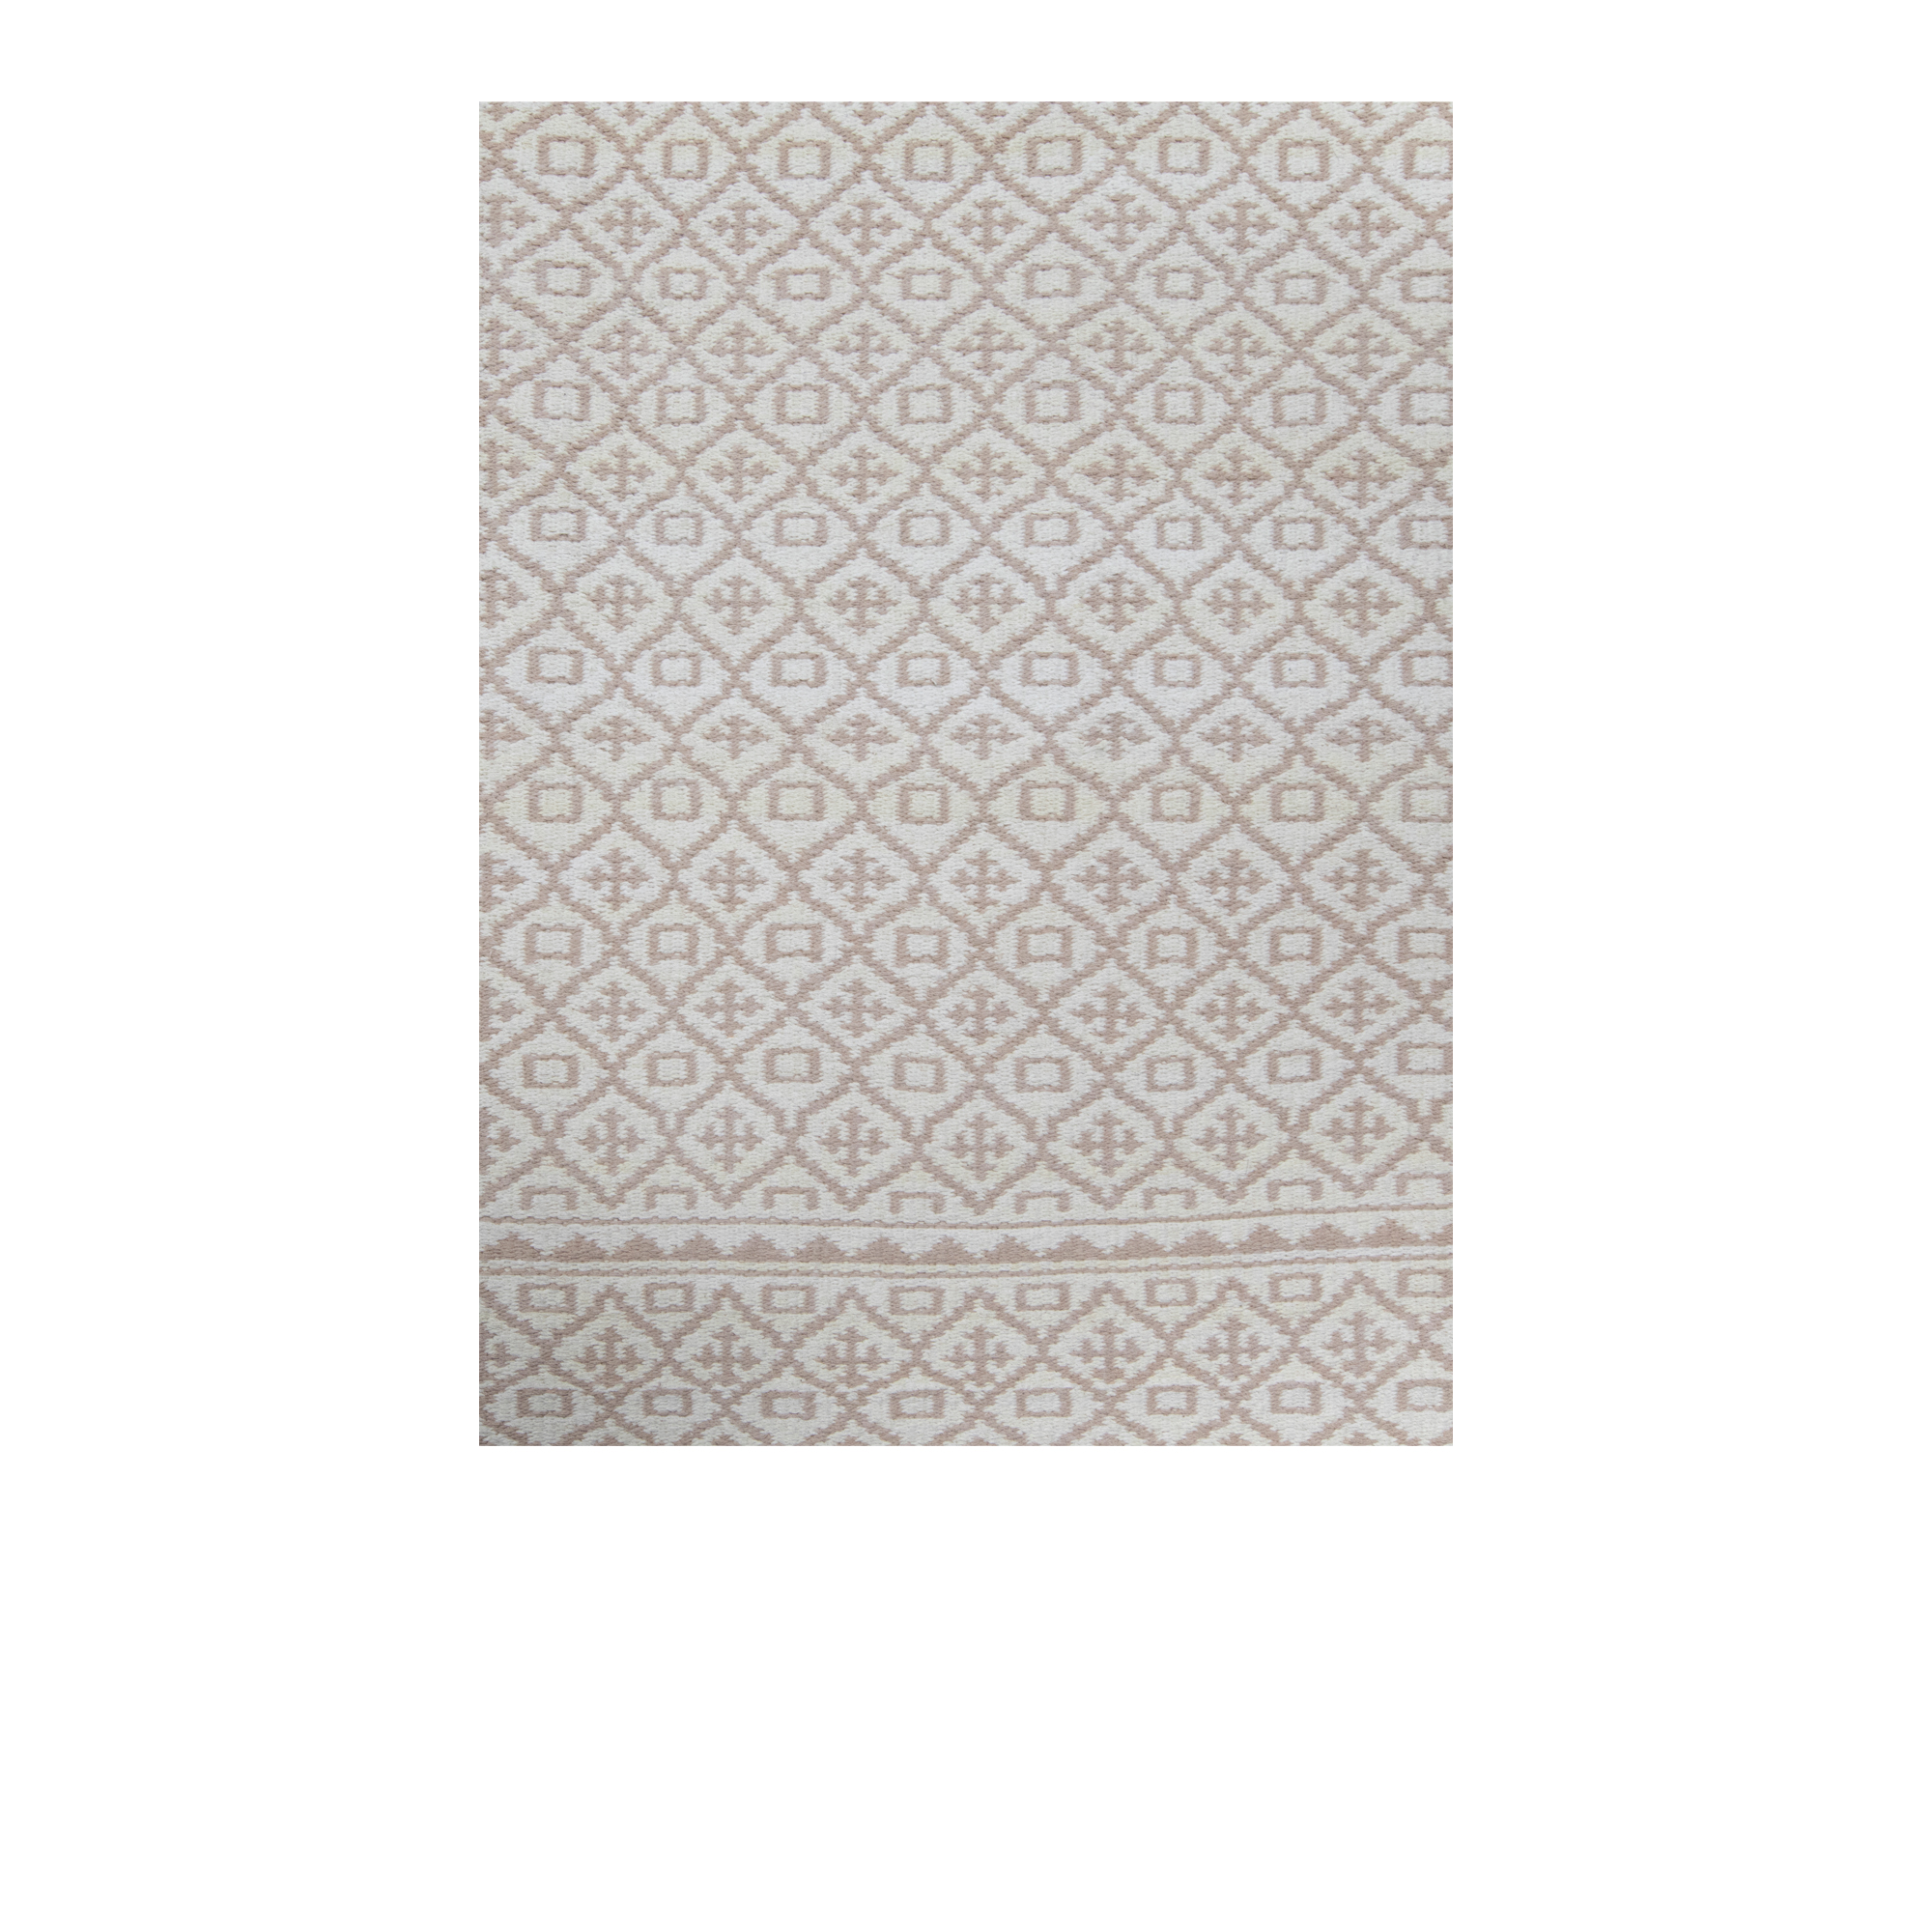 Zeillu rug is a flatweave inspired from antique Zeillu kilims that date back centuries. 